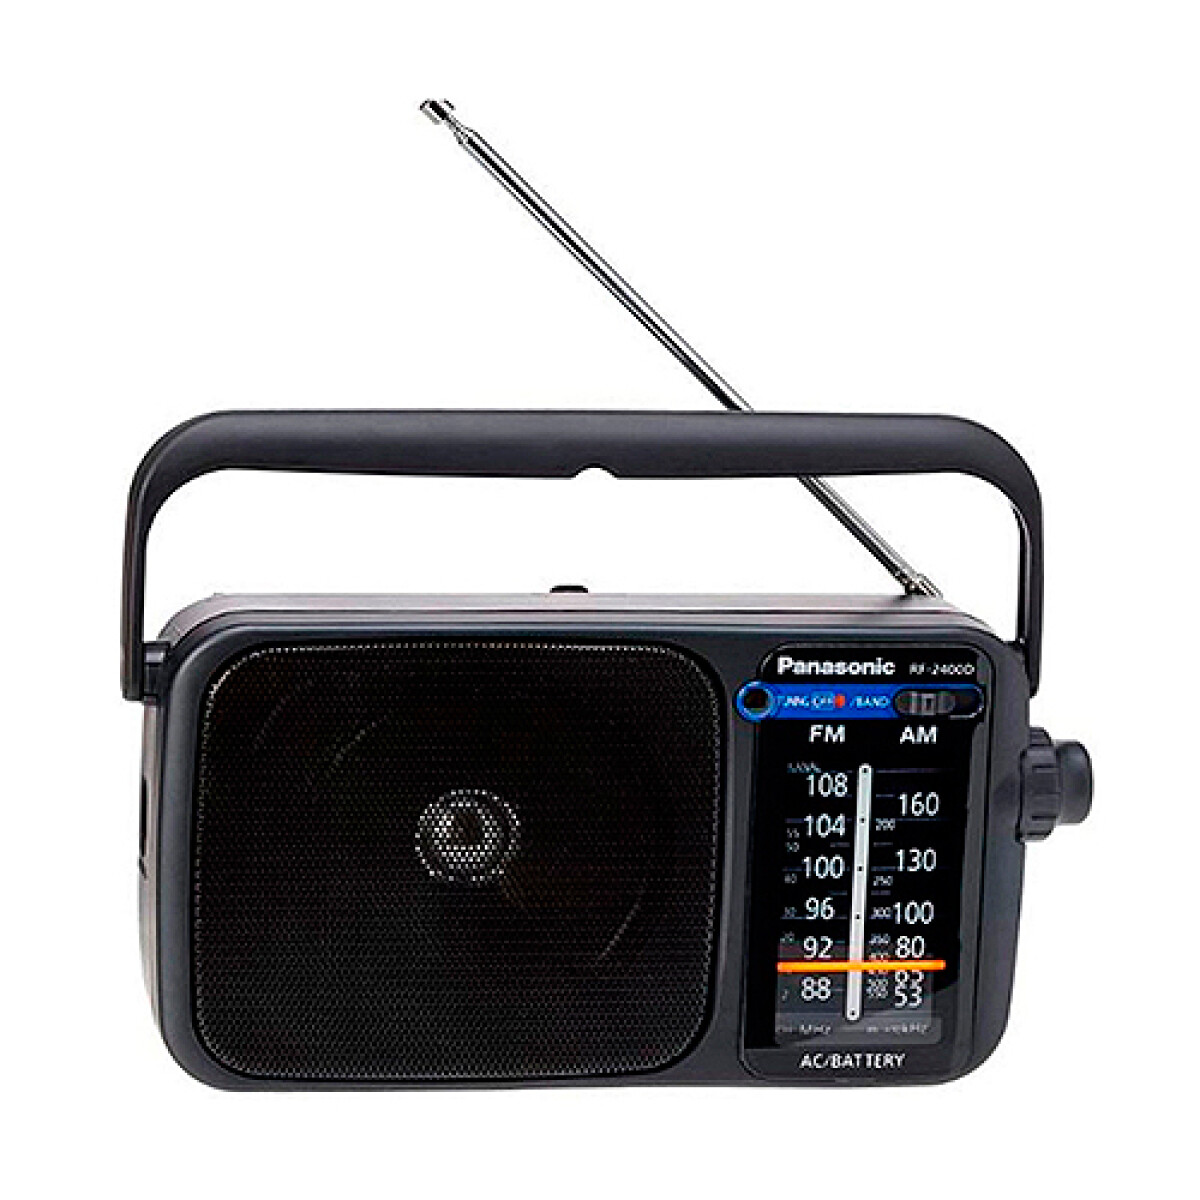 RADIO PANASONIC RF-2400D FM-AM Portatil - - Sin color 